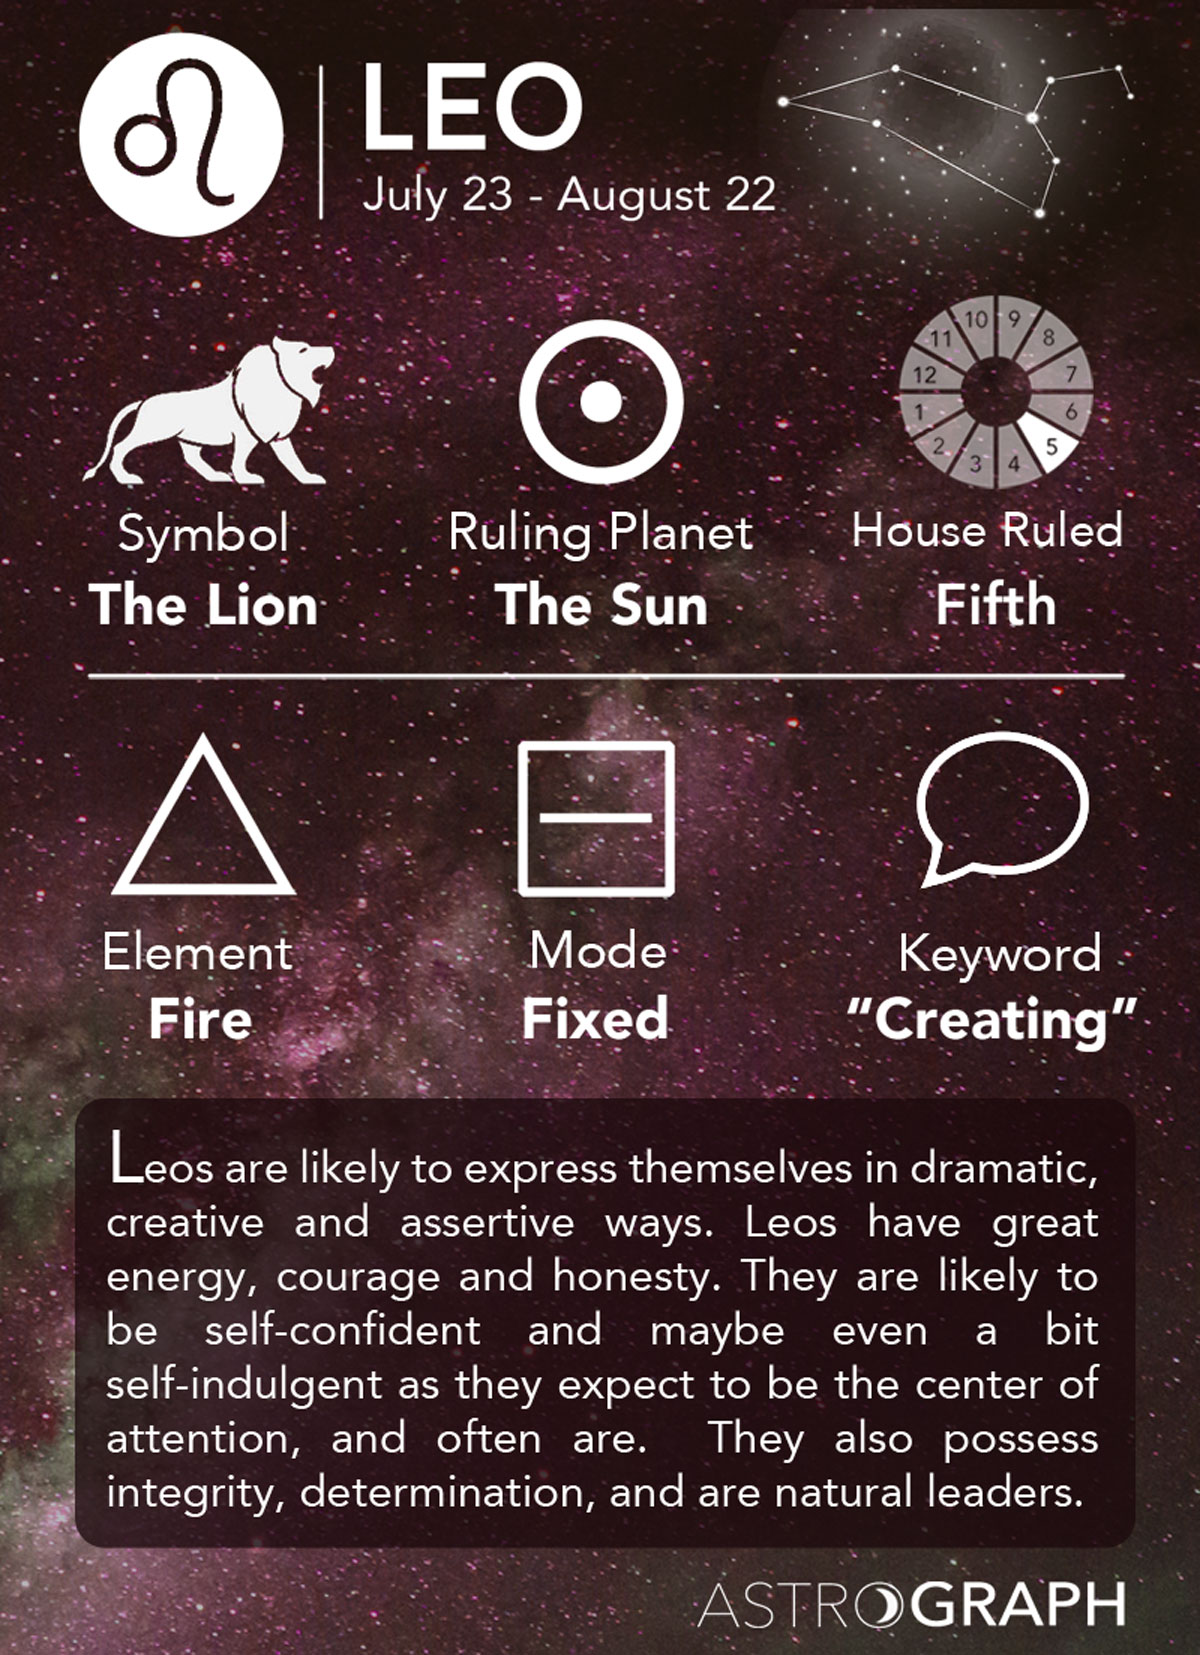 5 Leo Characteristics